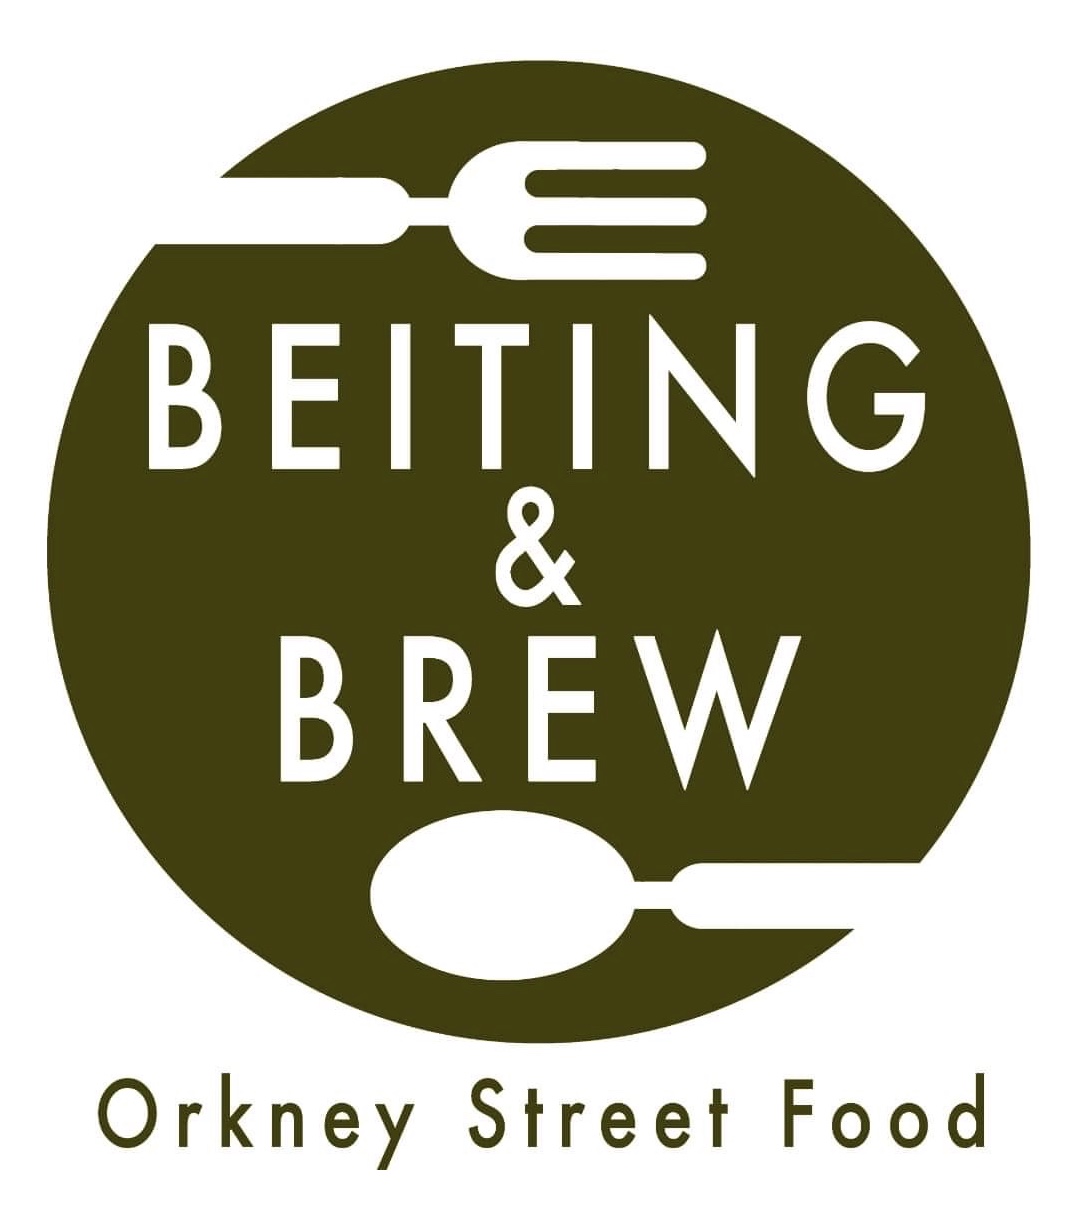 Orkney Street Food (Beiting & Brew) Logo